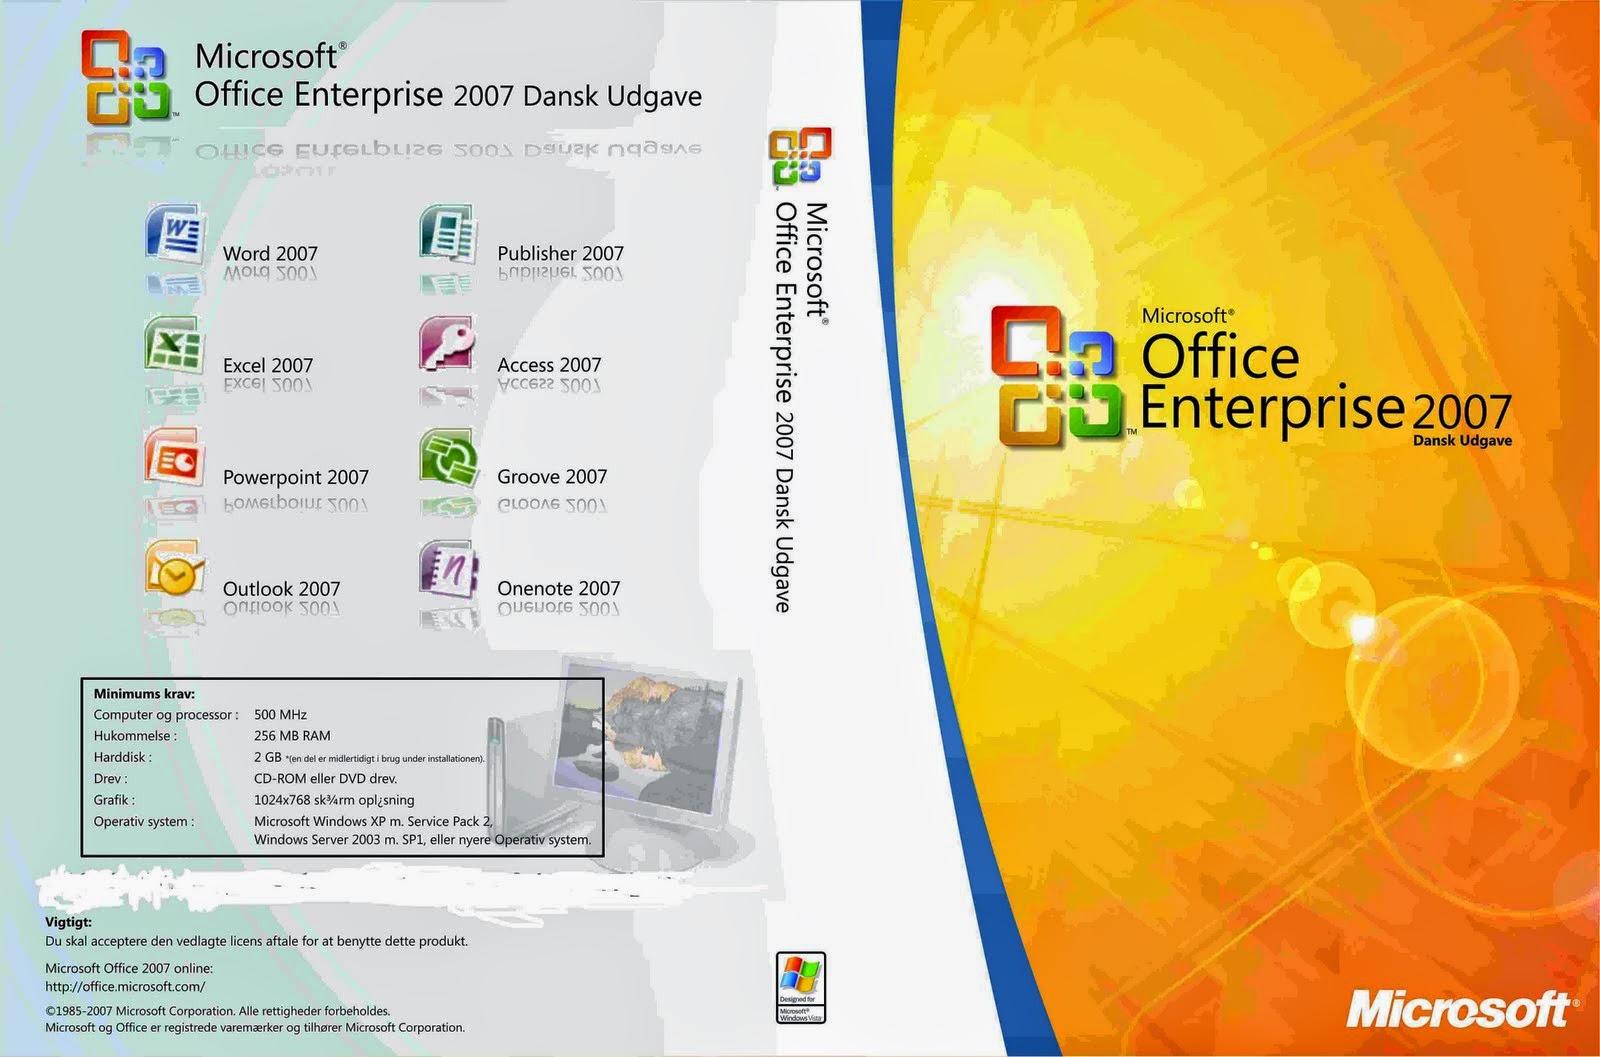 MS Office 2007 Enterprise license